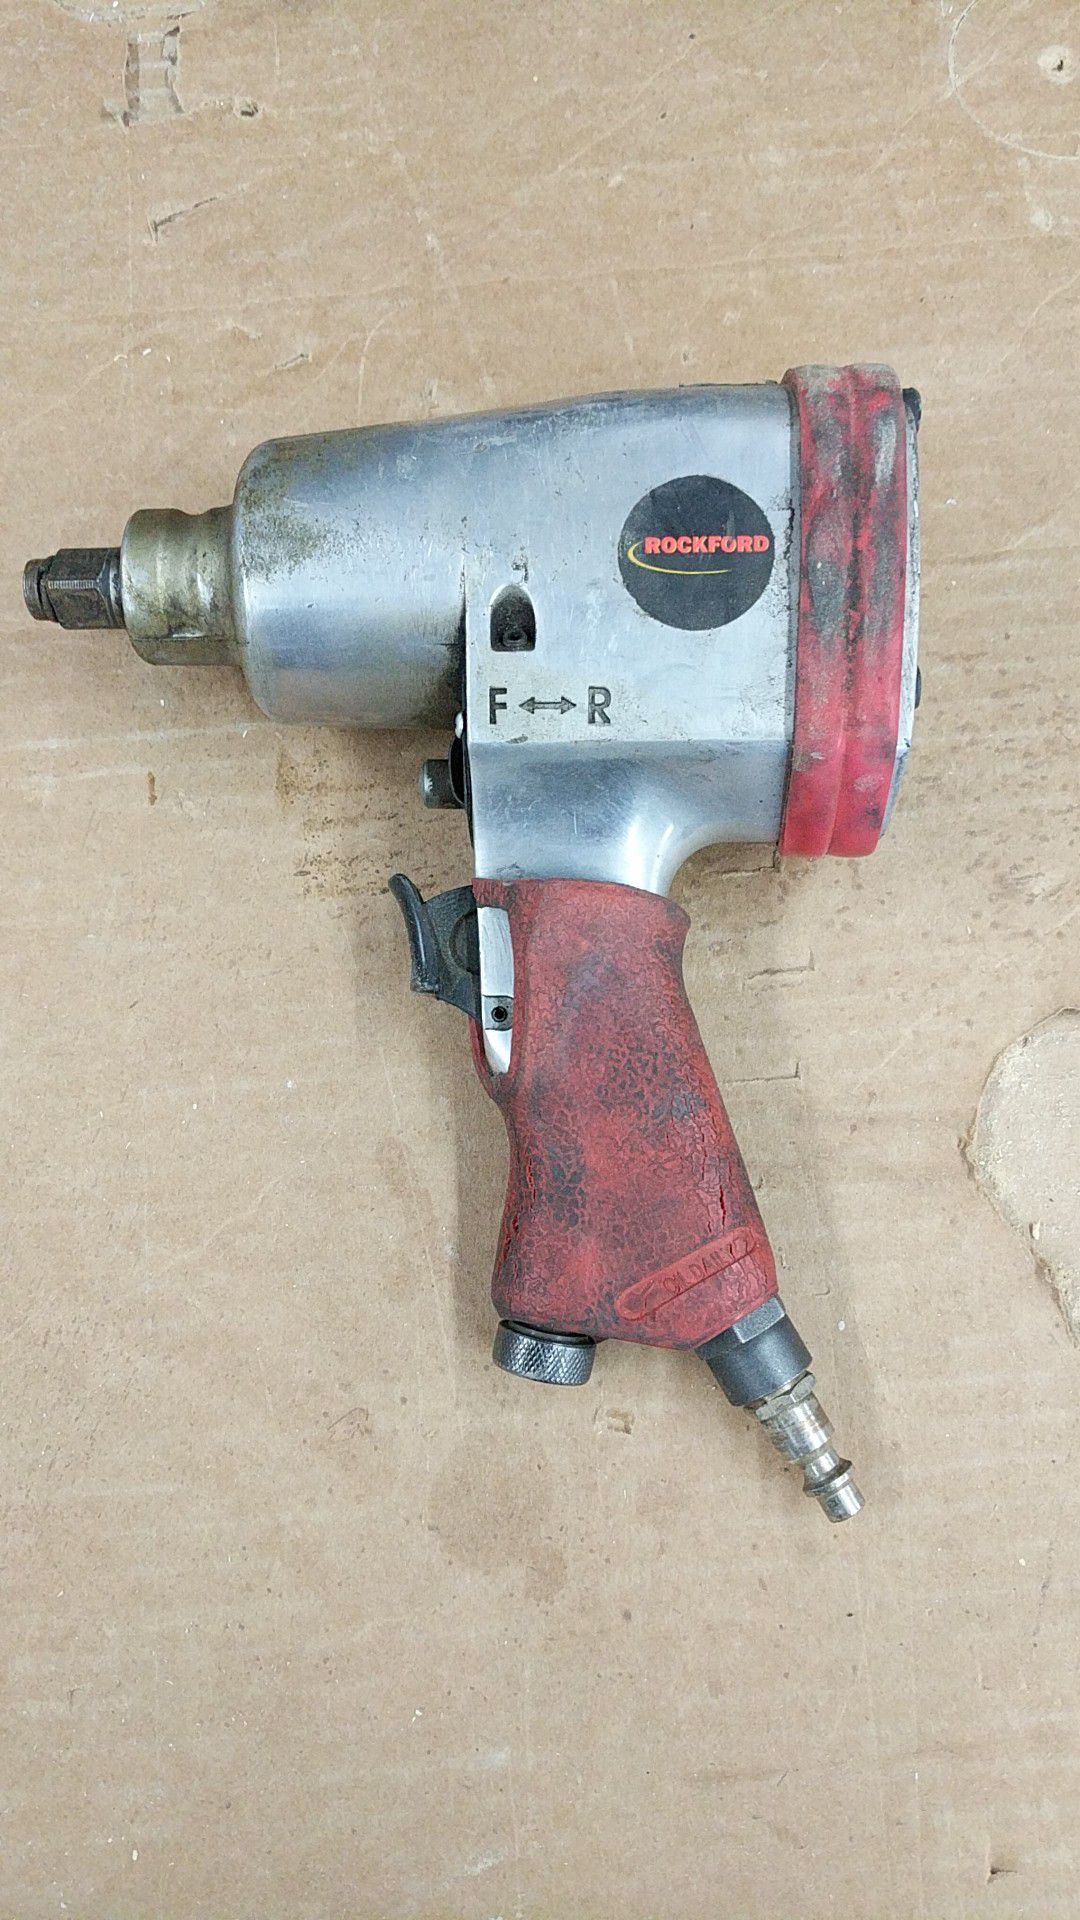 Rockford 1/2" impact wrench gun